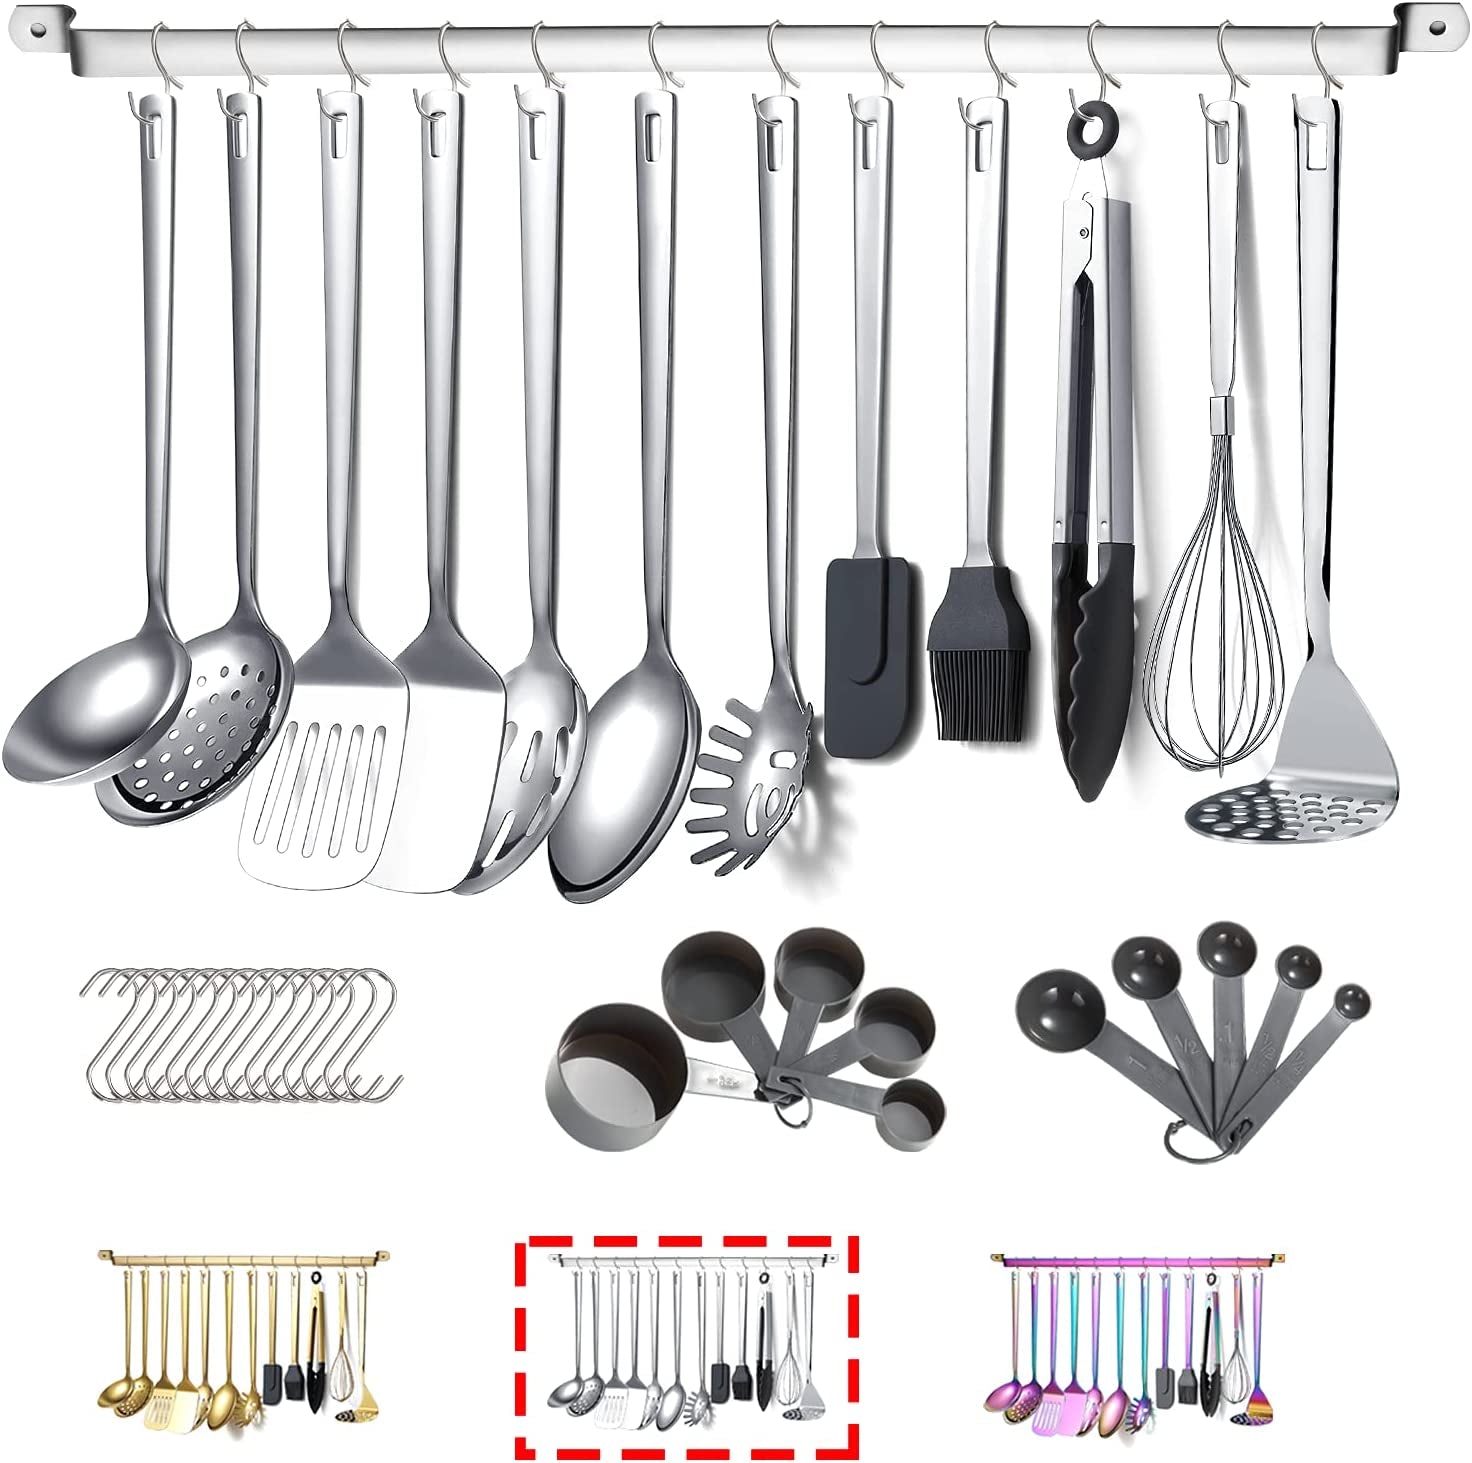 Kitchen Cookware Gadgets Tool Nylon Set of 23 Pcs - HomeHero